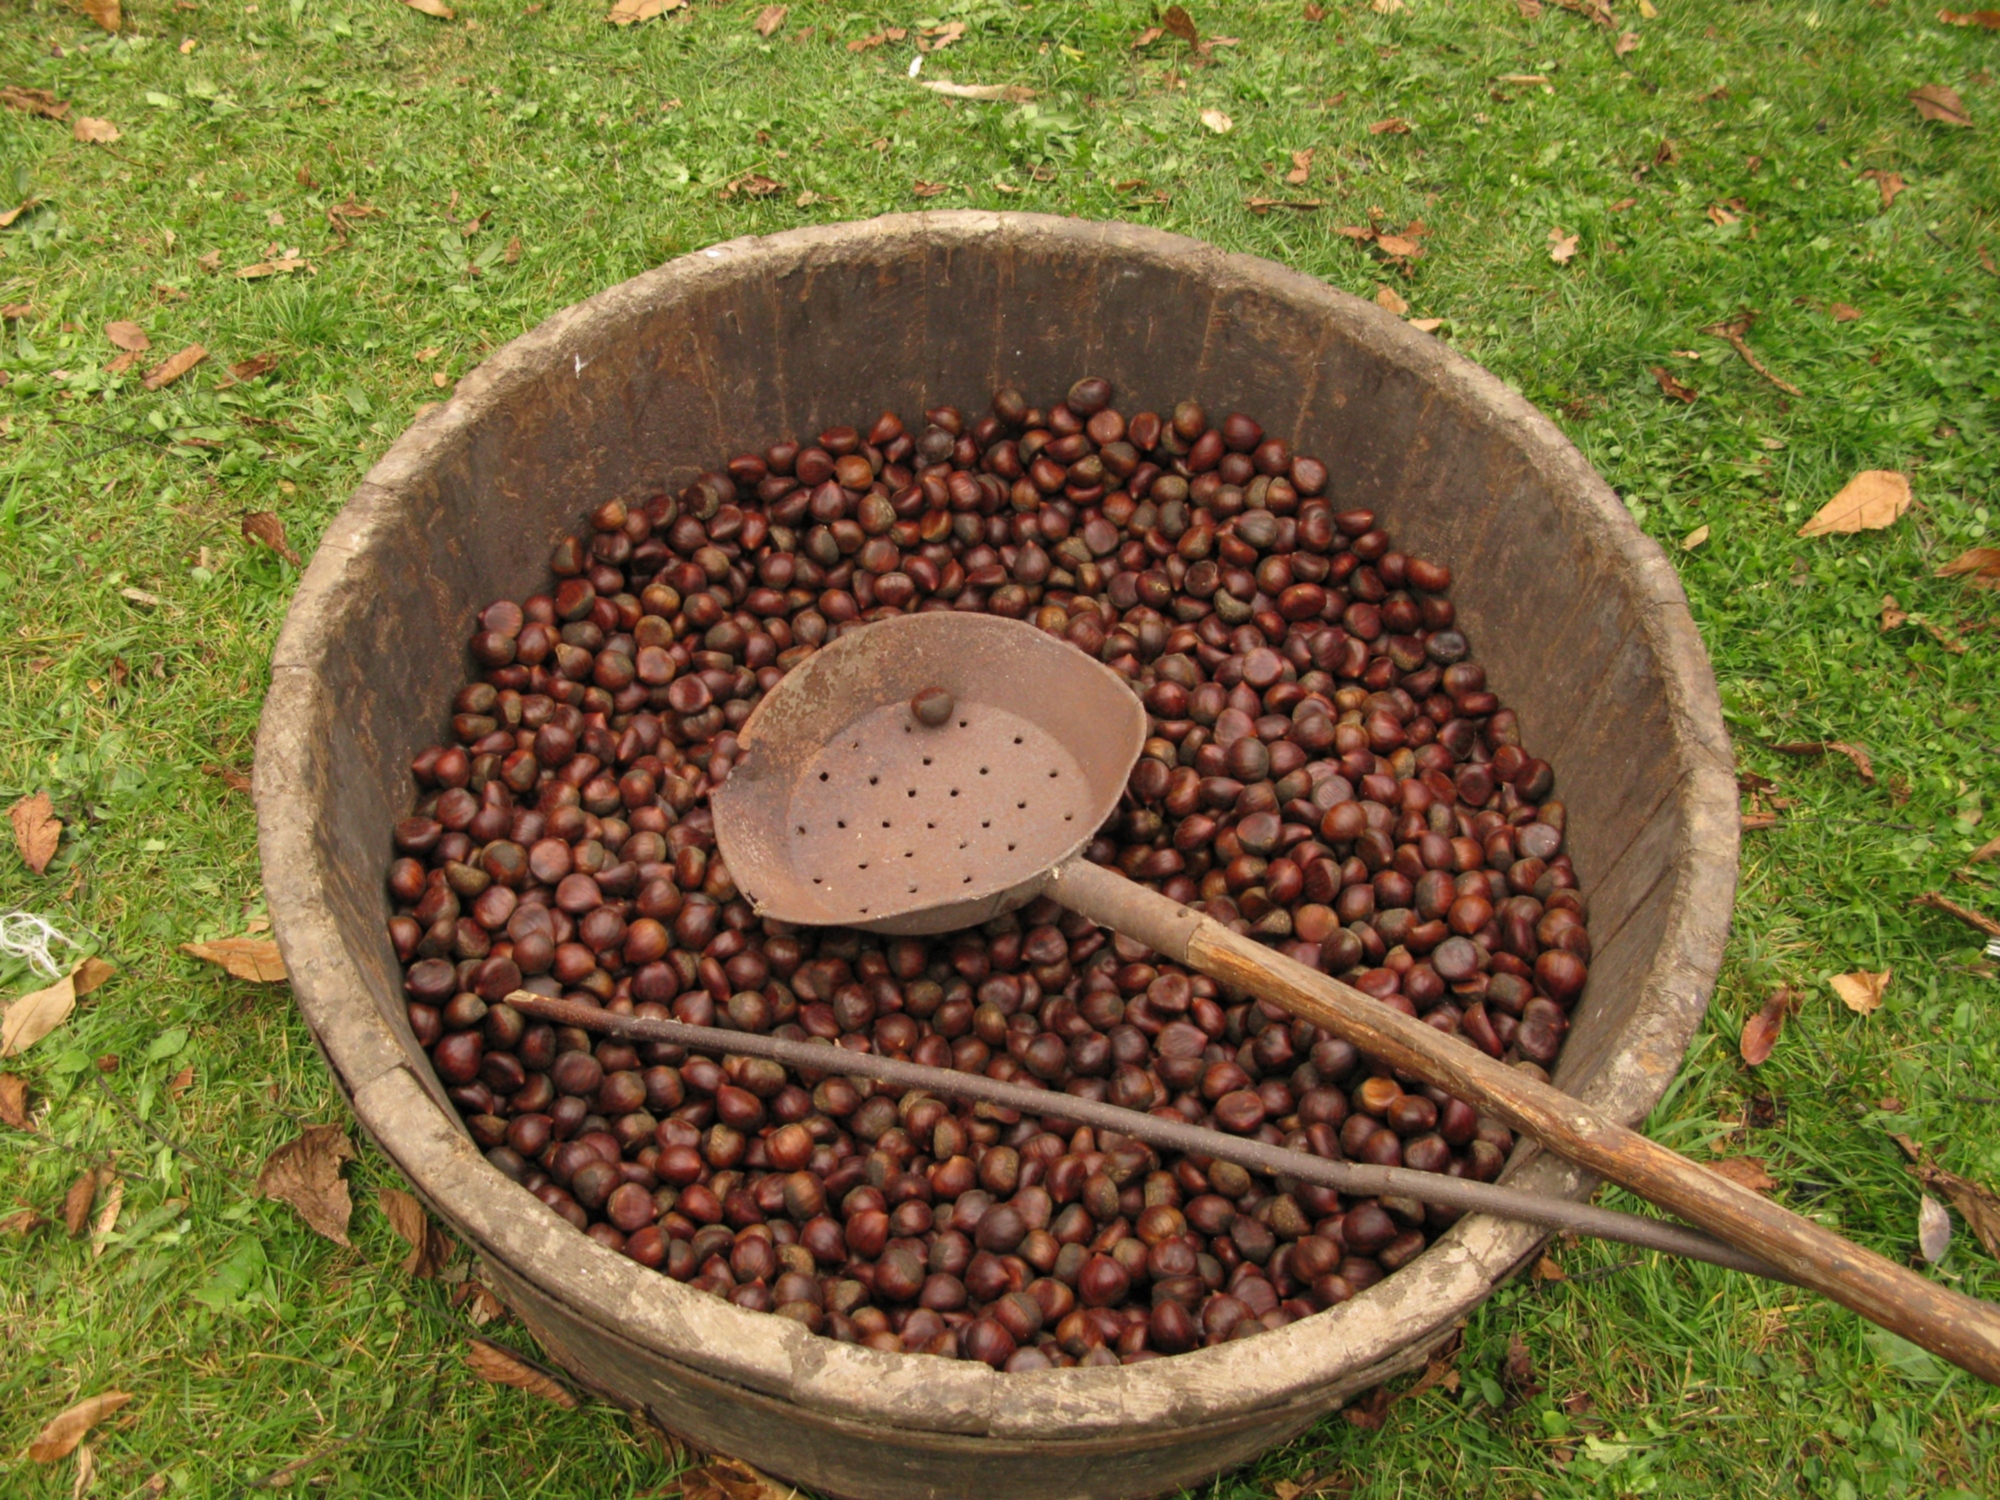 Garfagnana chestnuts